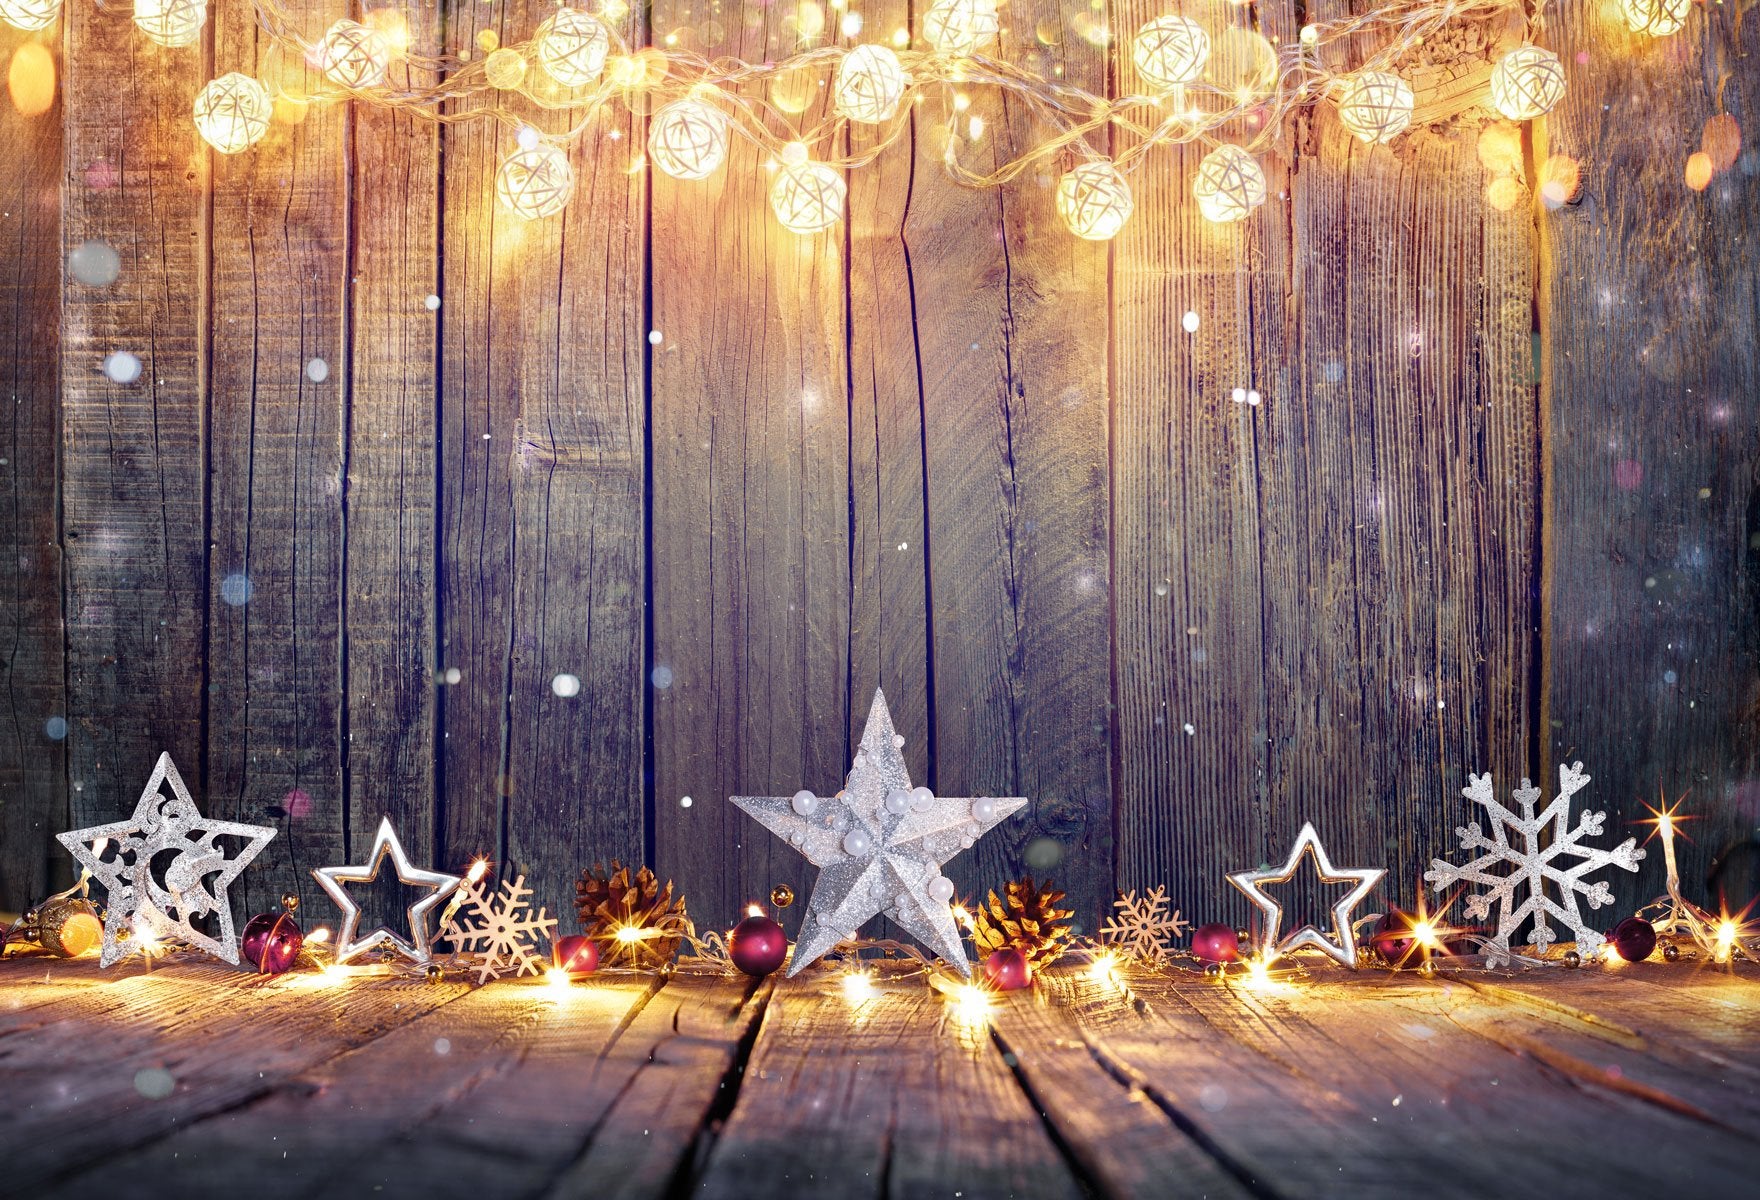 Kate Bokeh Glitter Wood Floor backdrop for Christmas photography - Kate backdrop UK